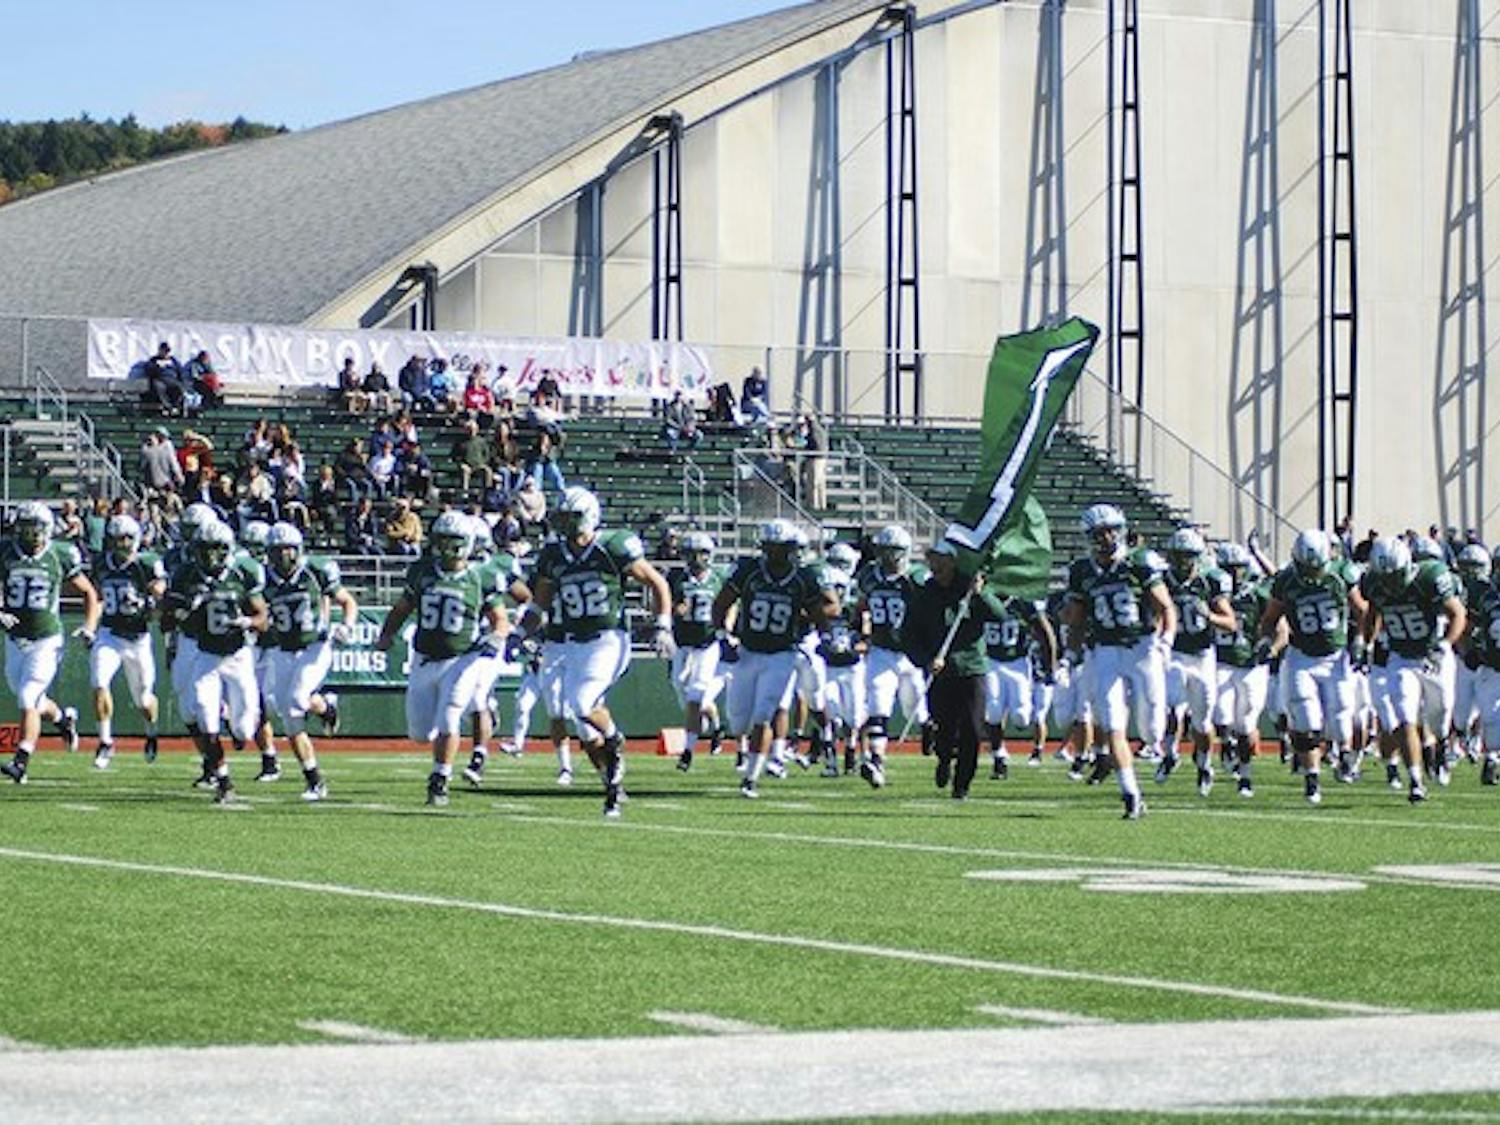 A preseason poll slated the Big Green football team to place fifth among Ivy League school teams.